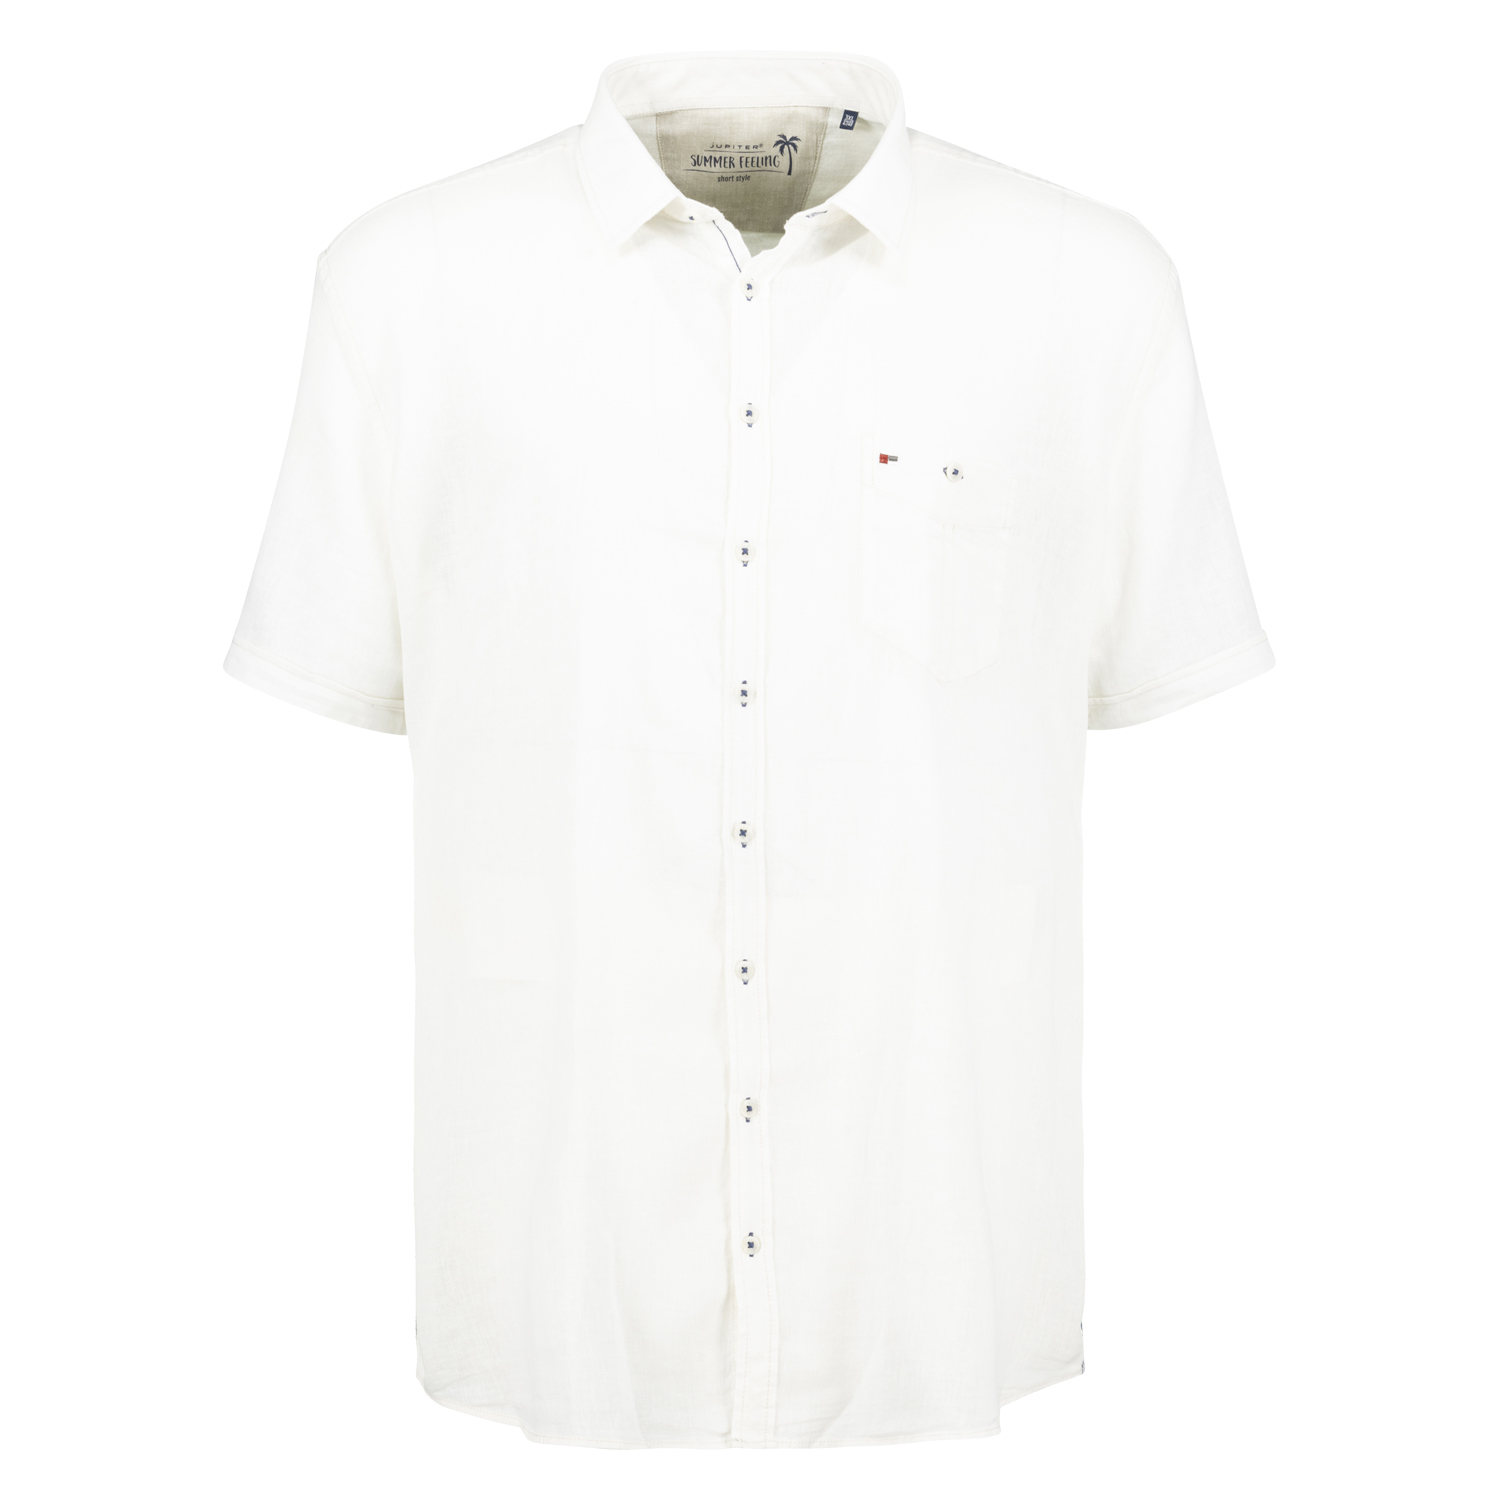 Mens Short Sleeve Summer Shirt in white by Jupiter in Oversizes 3XL-7XL